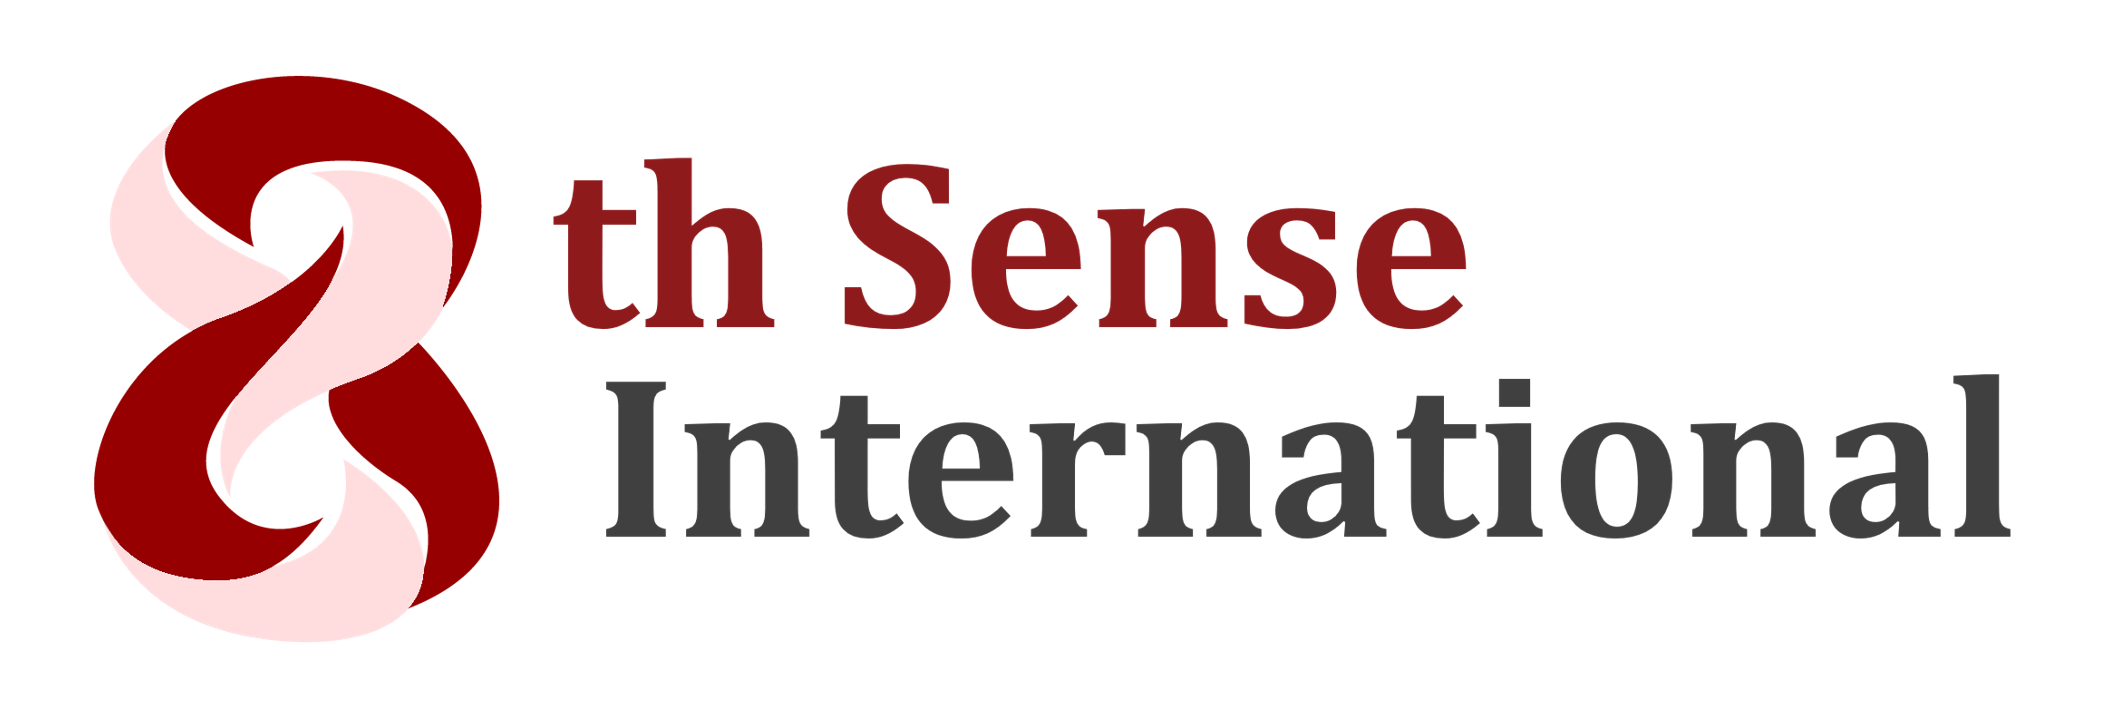 8th Sense International